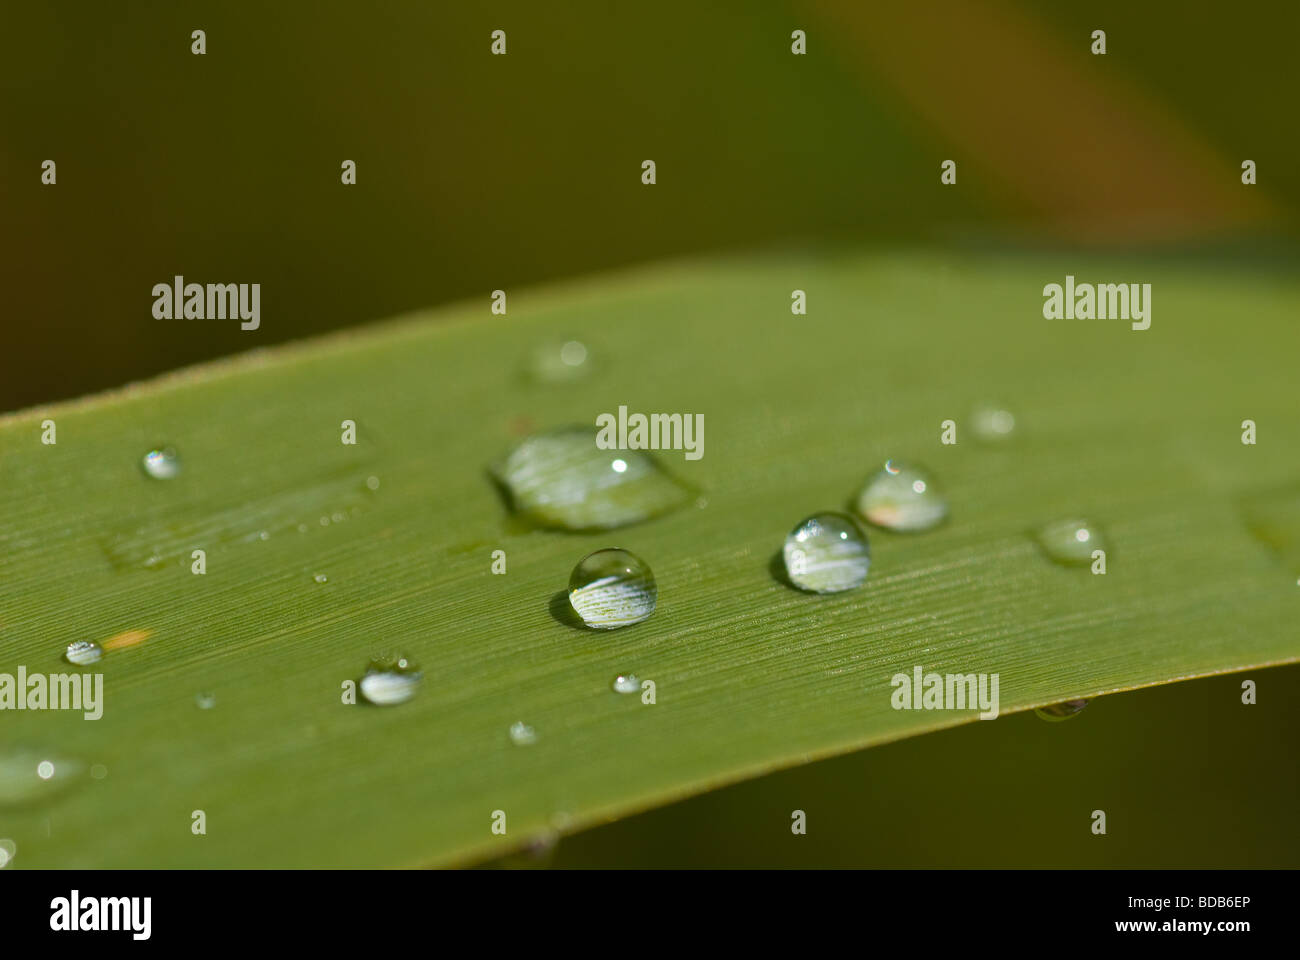 Macro photograph of multiple rain drops on a green grass leaf Stock Photo